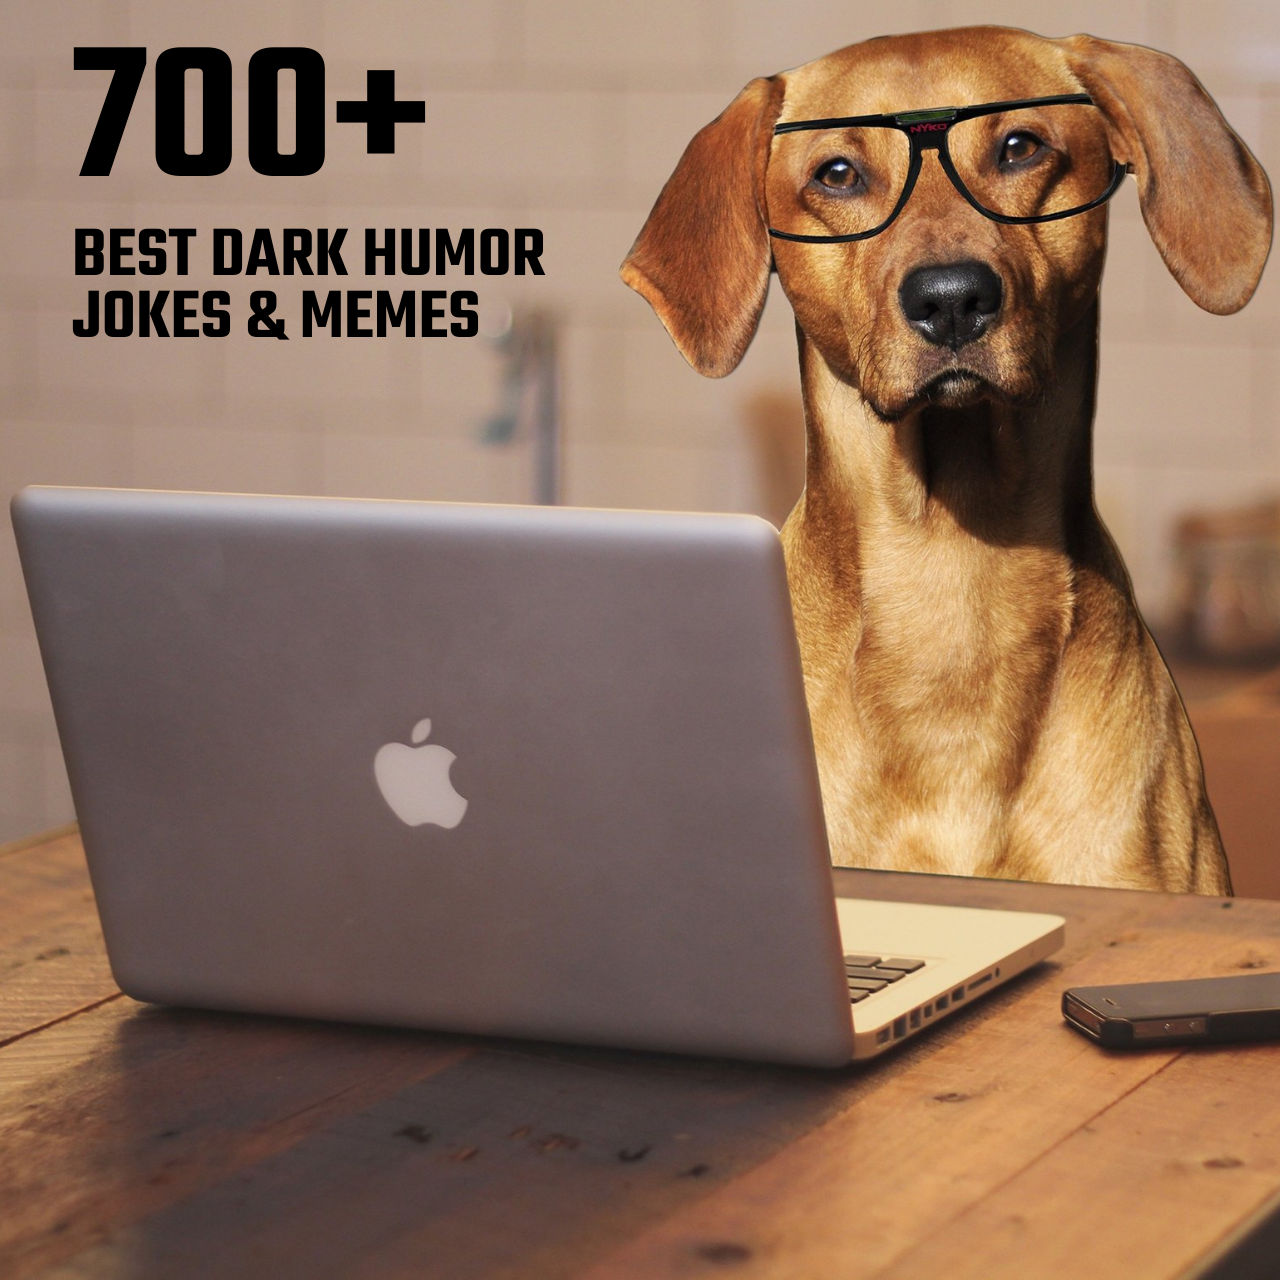 800+ Best No Limit Dark Humor Jokes & Memes to make you laugh Hilariously